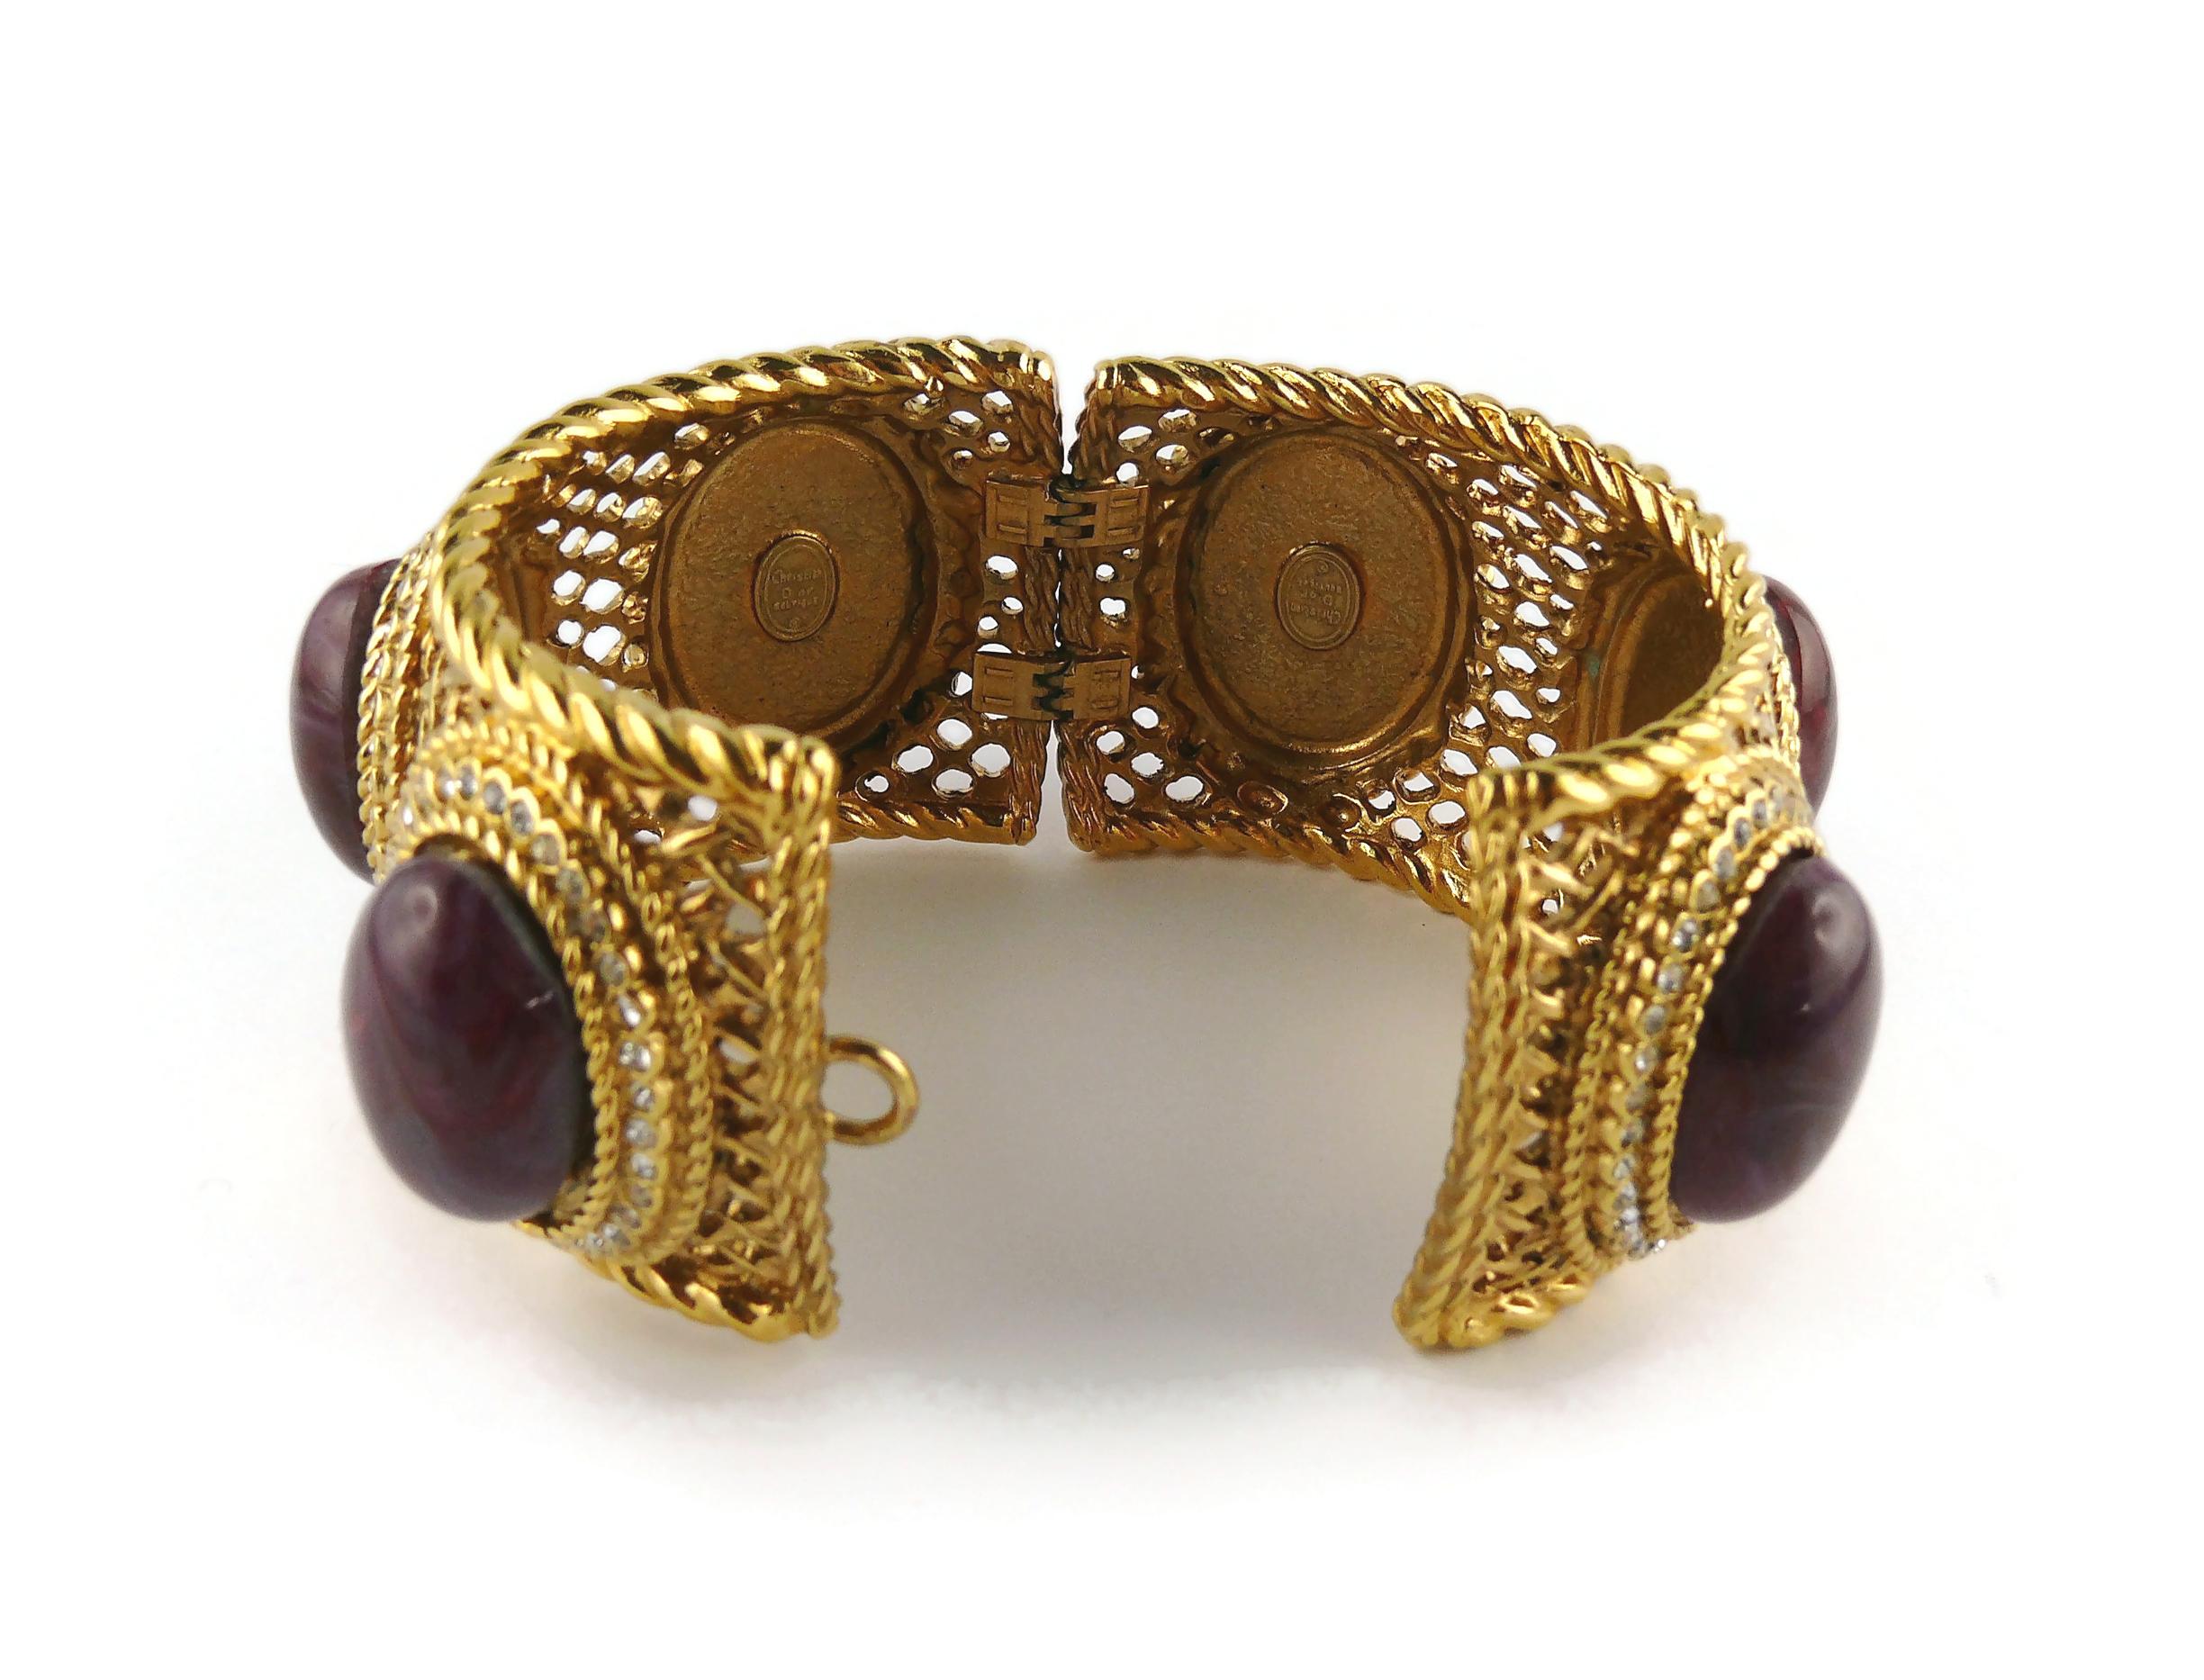 Christian Dior Boutique Massive Jewelled Gold Toned Latticework Cuff Bracelet For Sale 5